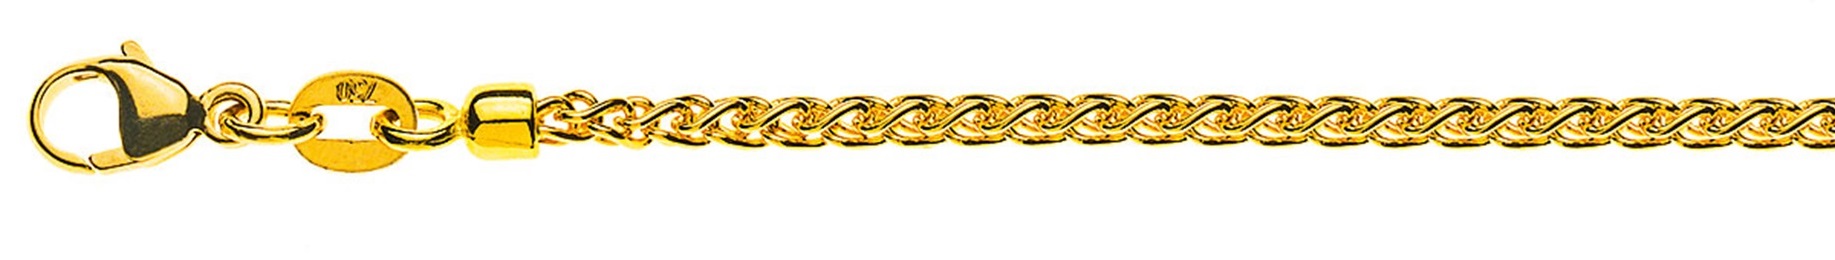 AURONOS Prestige Collier en or jaune 18K torsadé 45cm 2.15mm